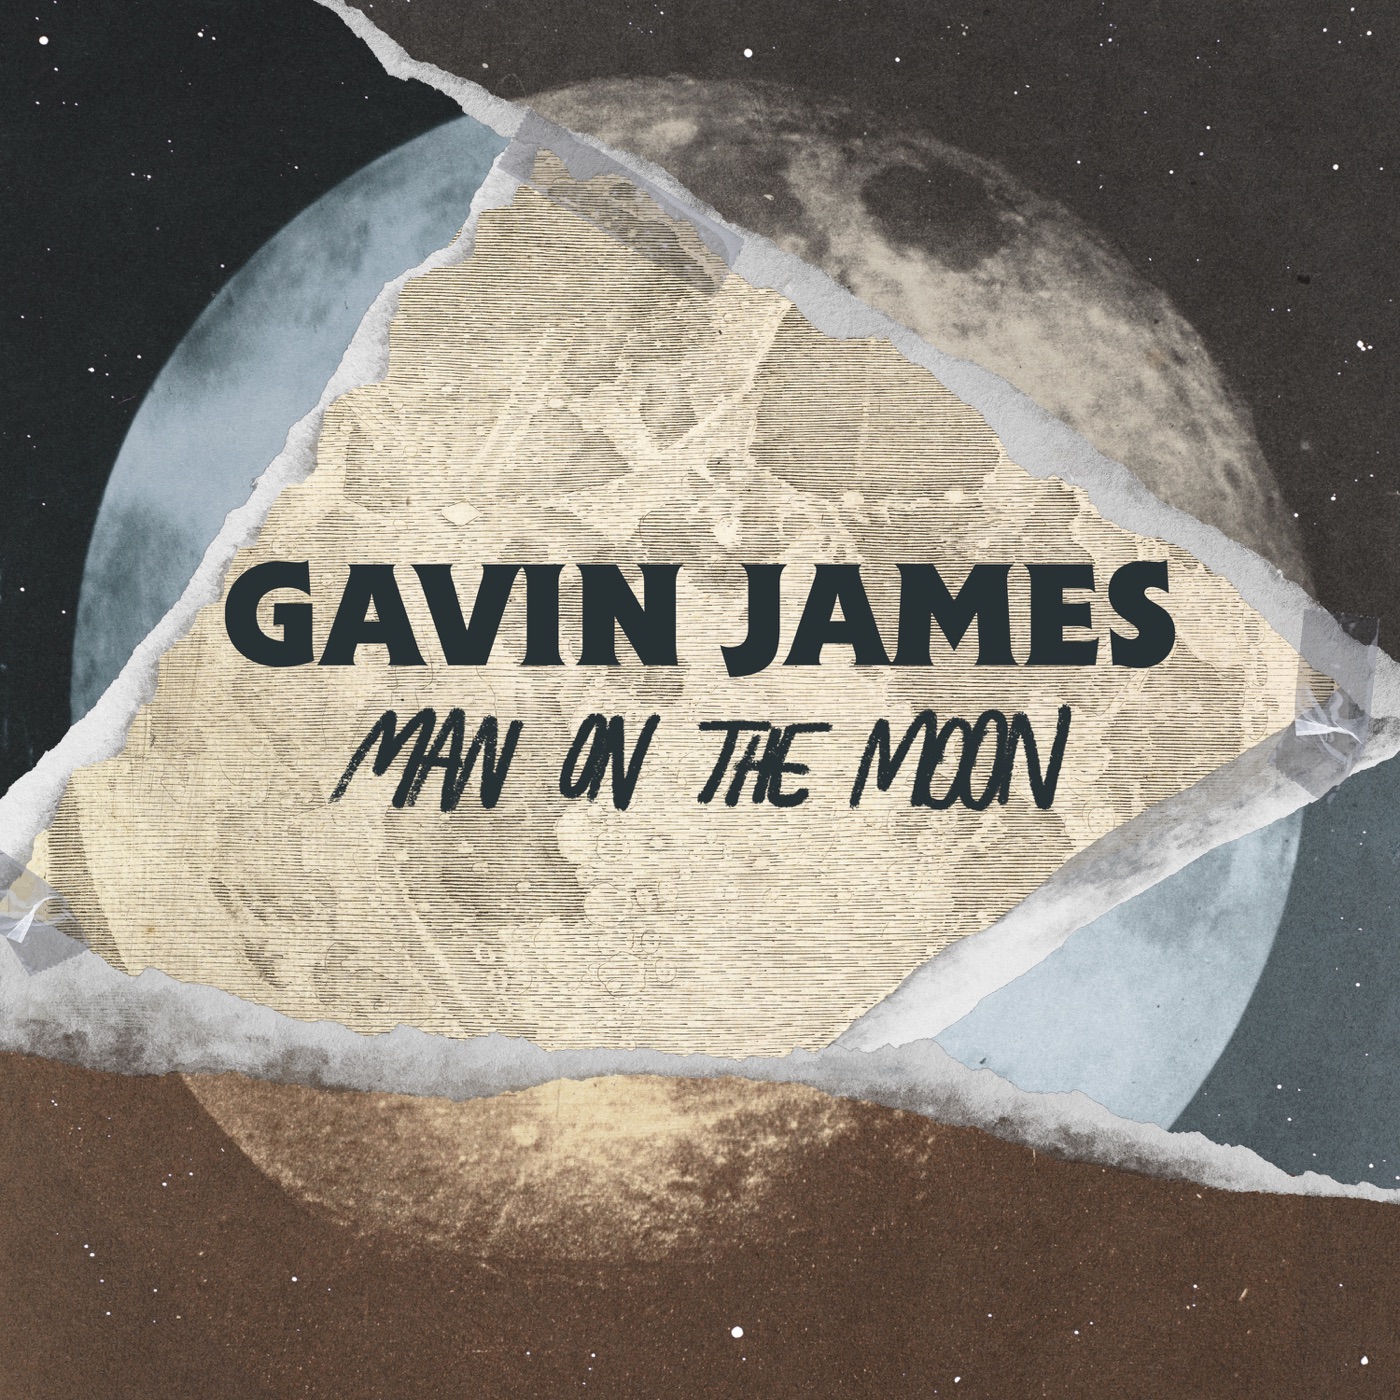 Man On The Moon by Gavin James